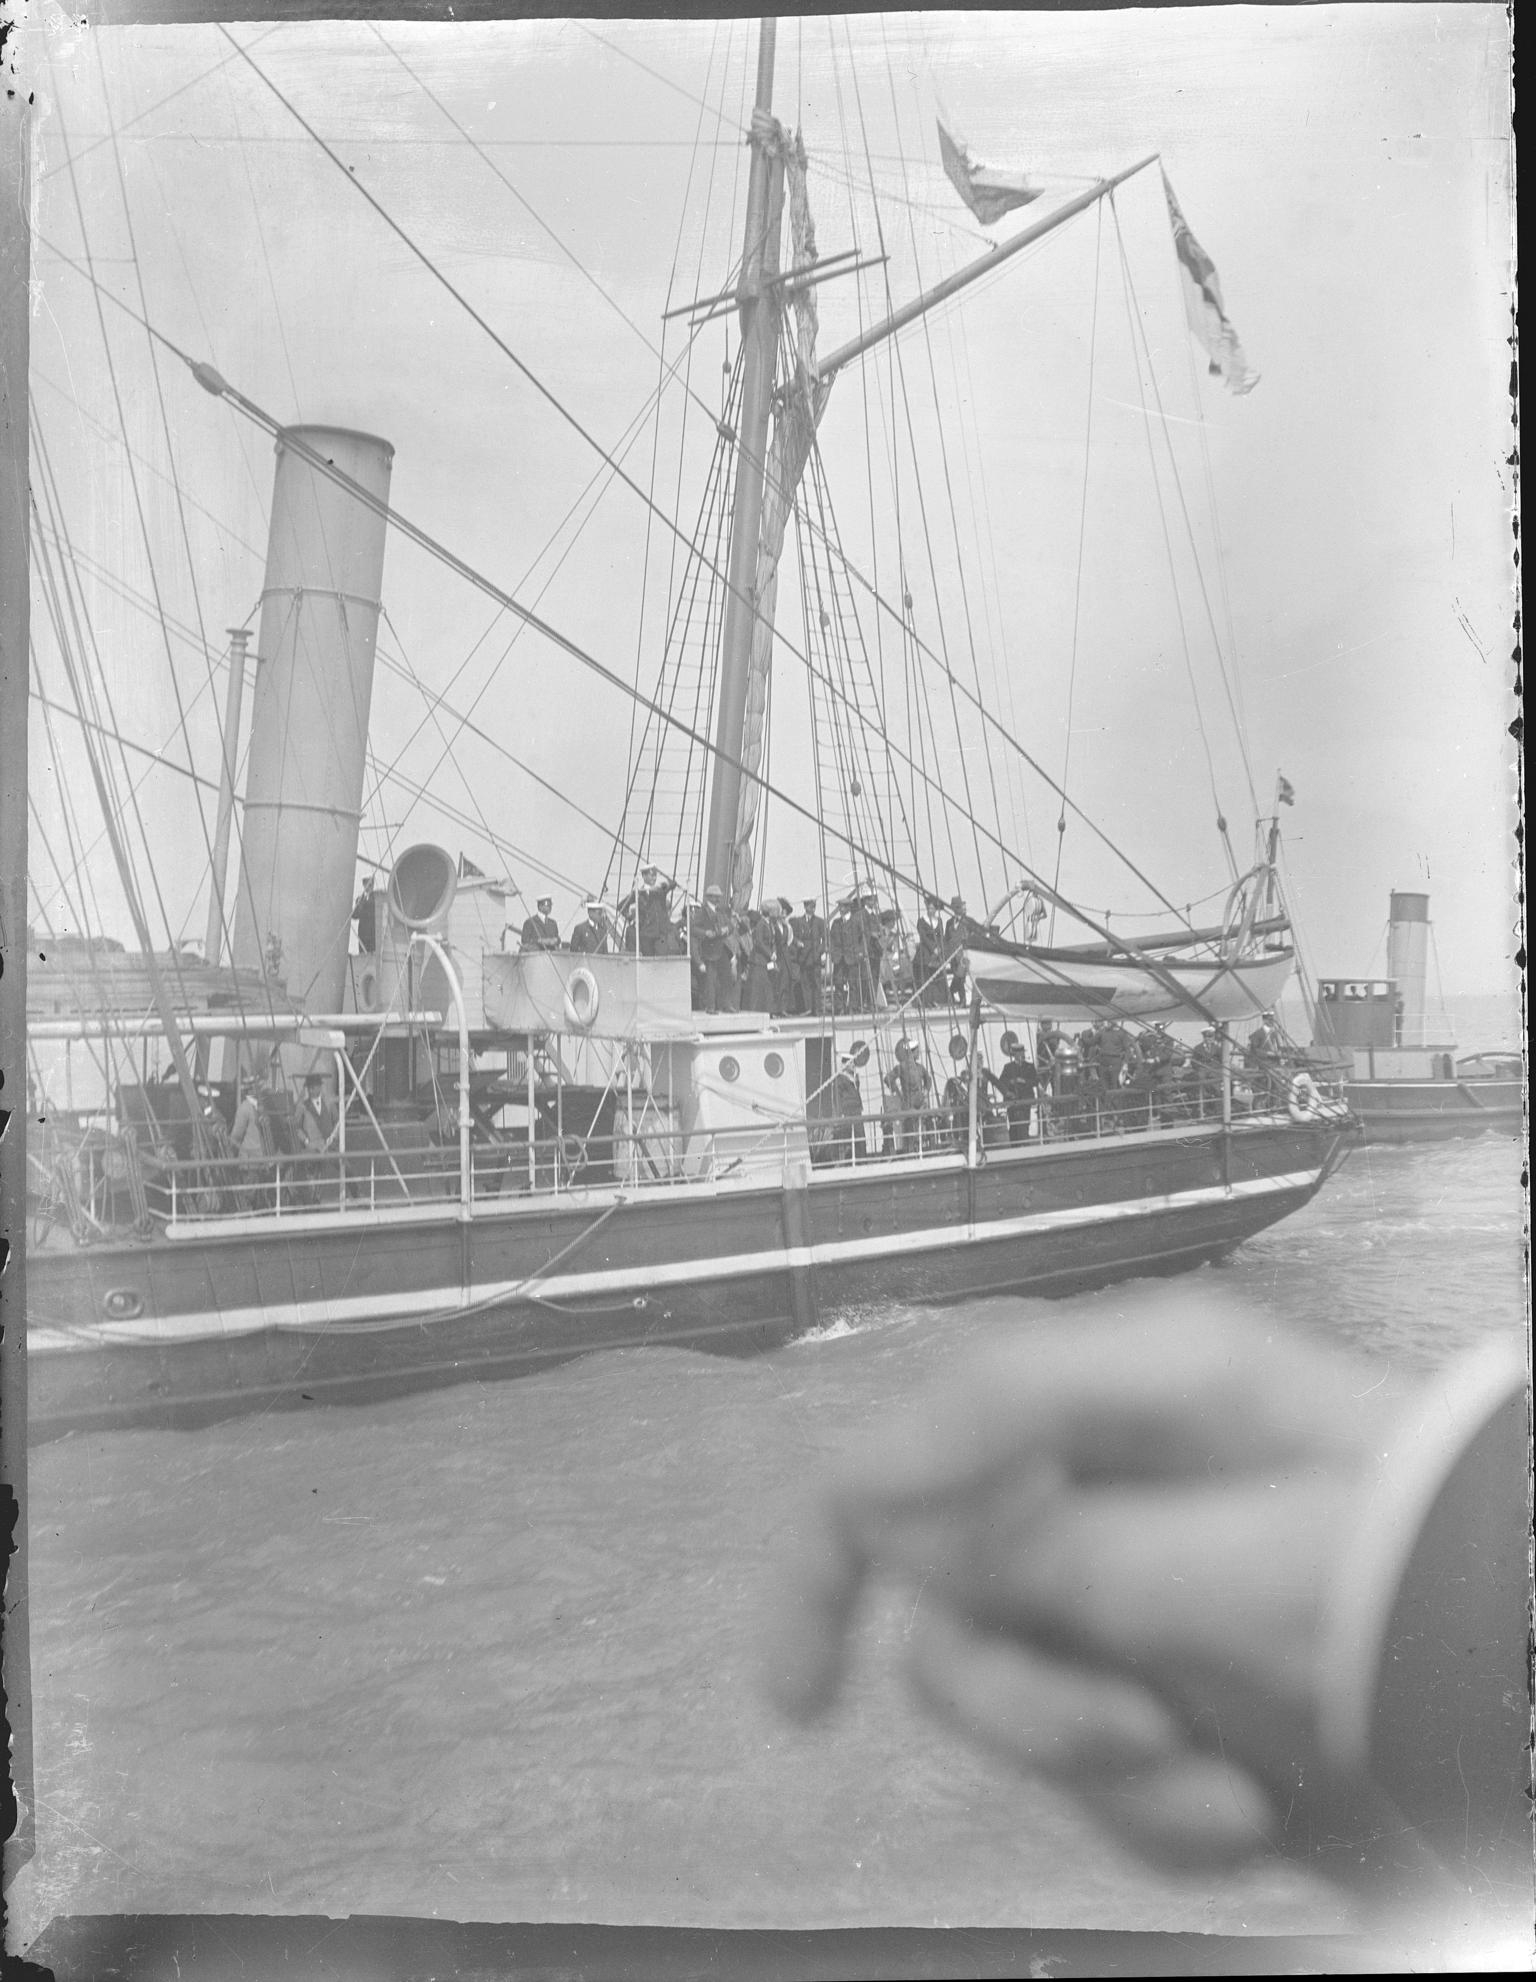 TERRA NOVA leaving Cardiff, 1910, glass negative